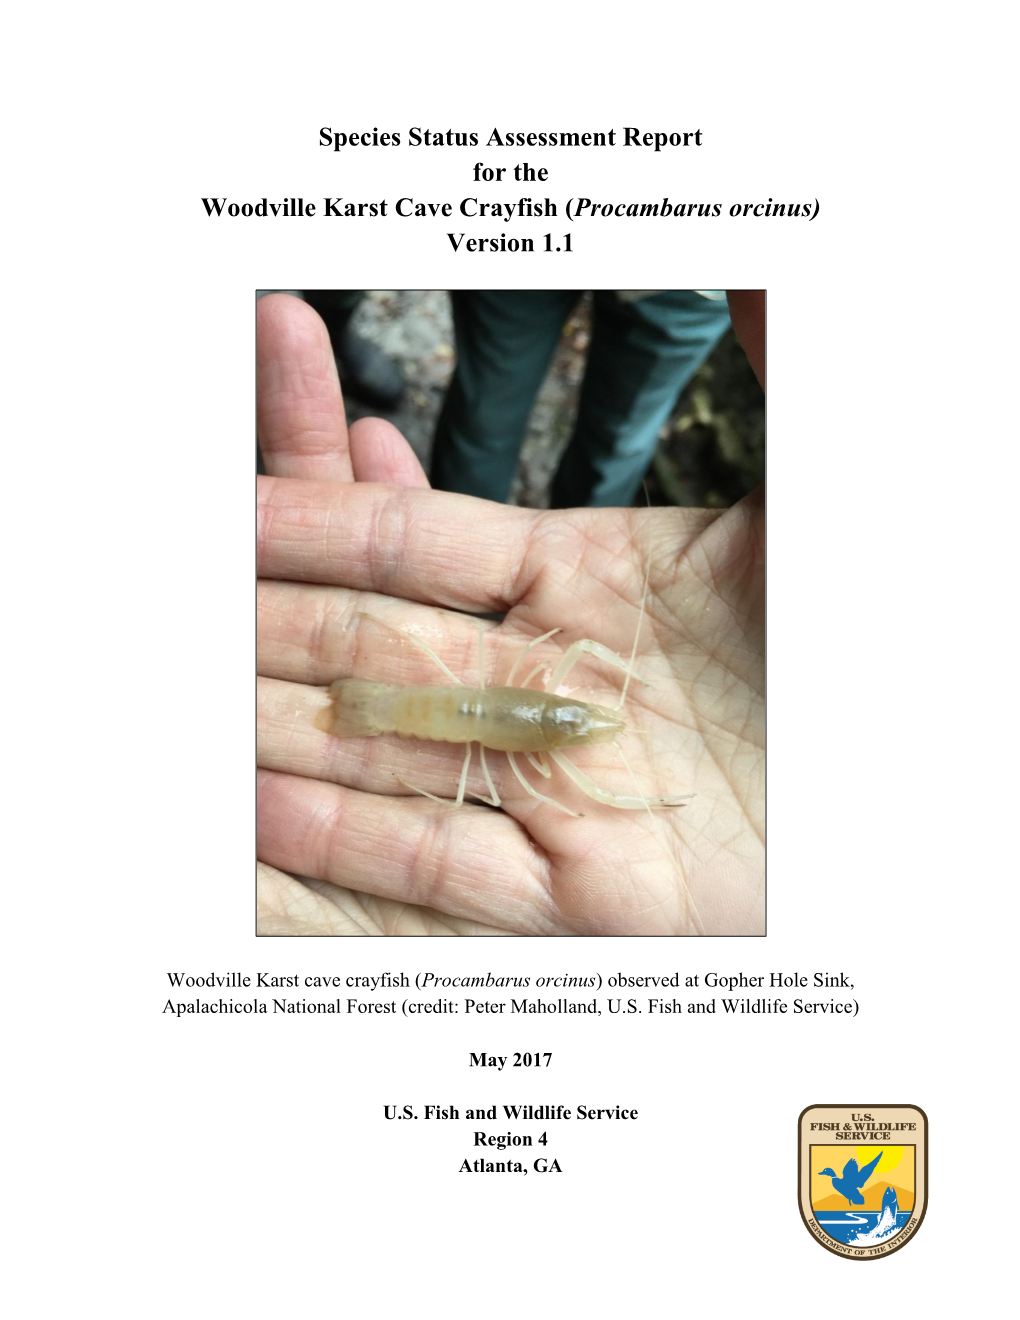 Species Status Assessment Report for the Woodville Karst Cave Crayfish (Procambarus Orcinus) Version 1.1